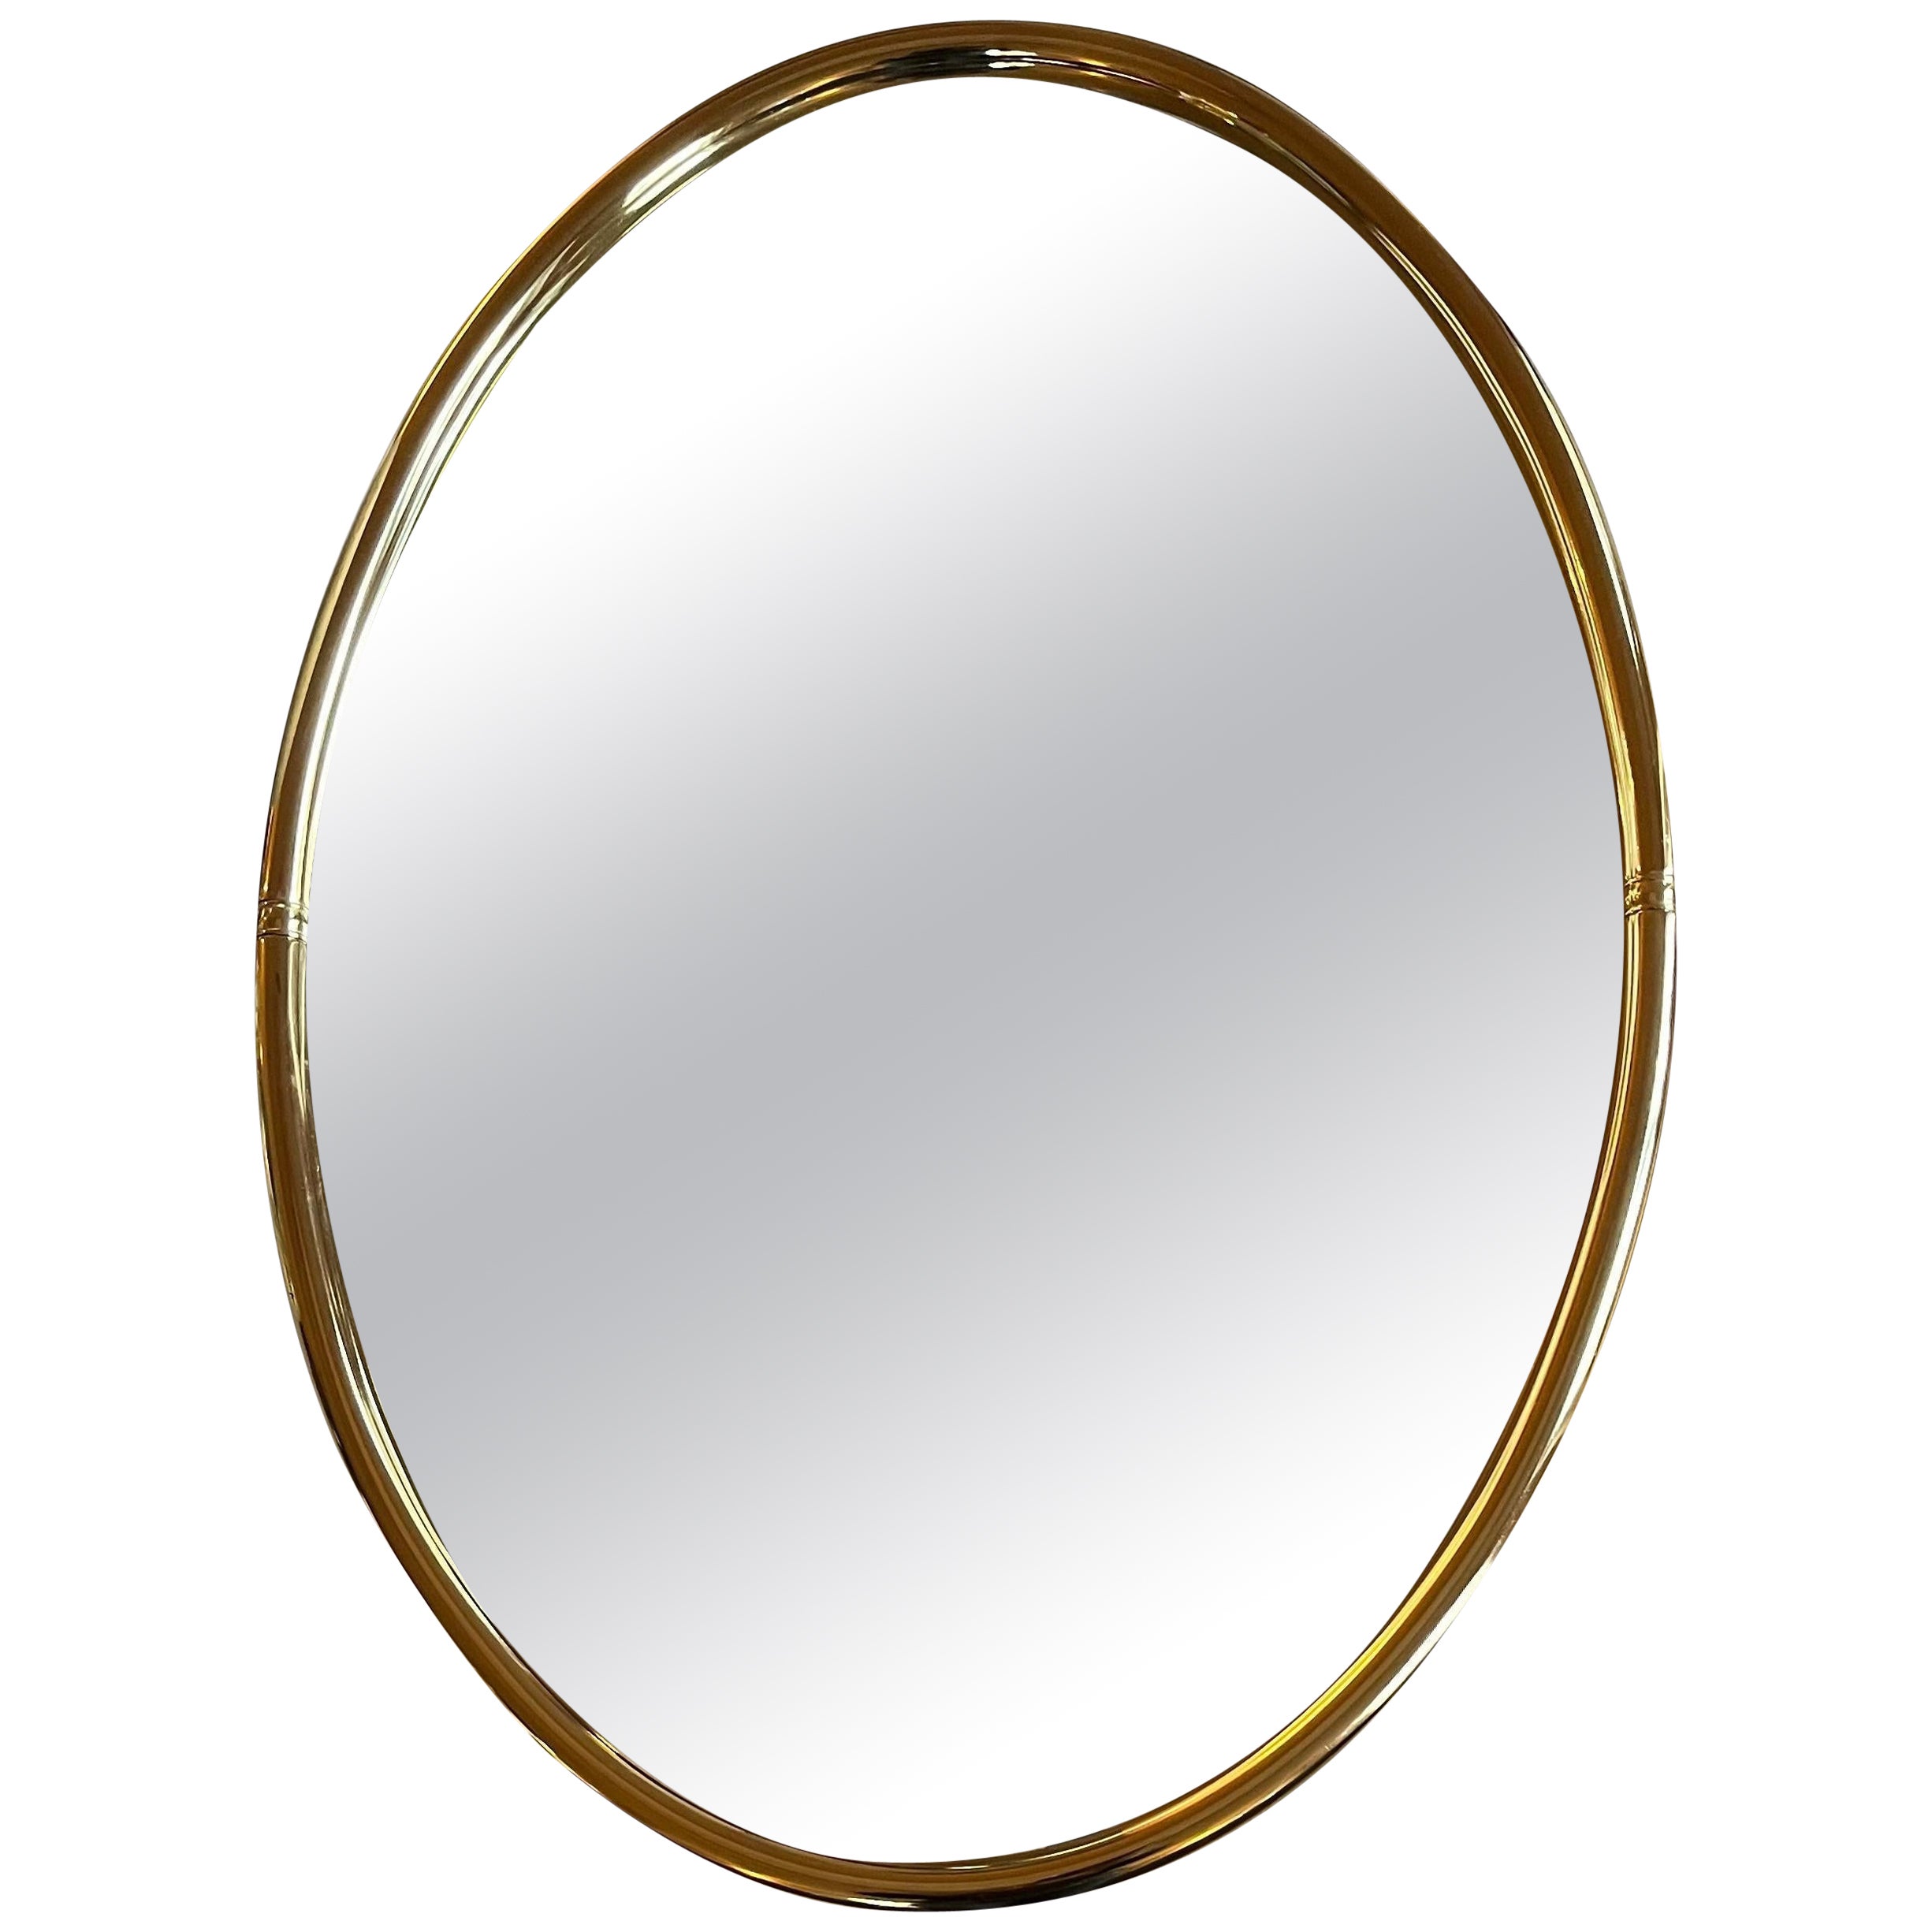 Small oval gilt metal mirror